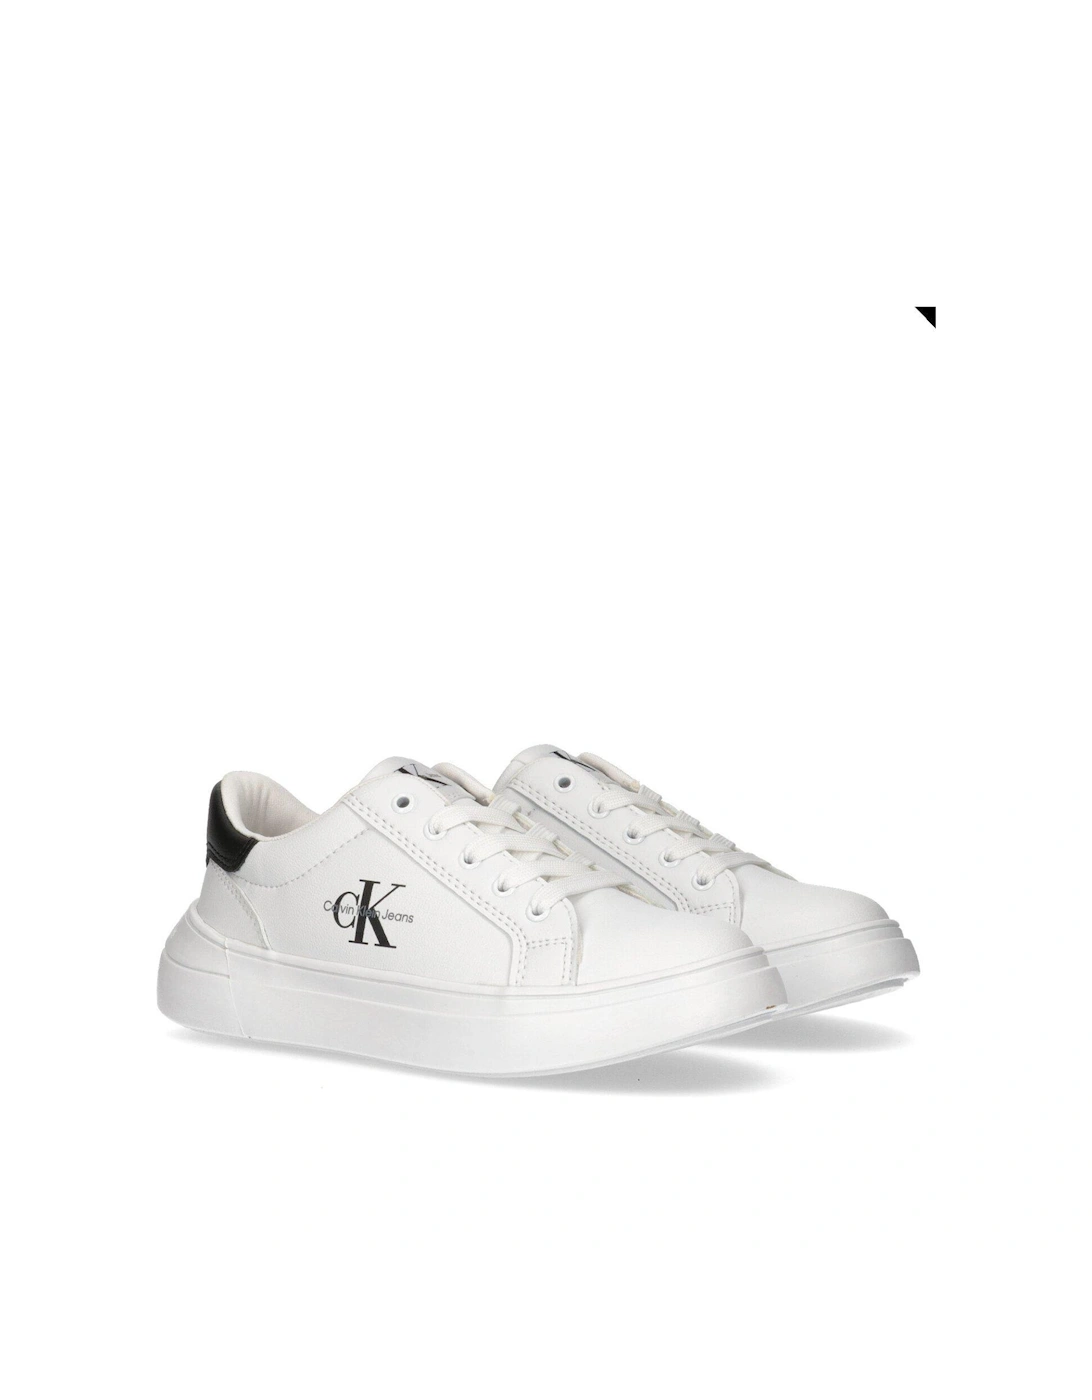 Kids Low Cut Sneaker - White/Black